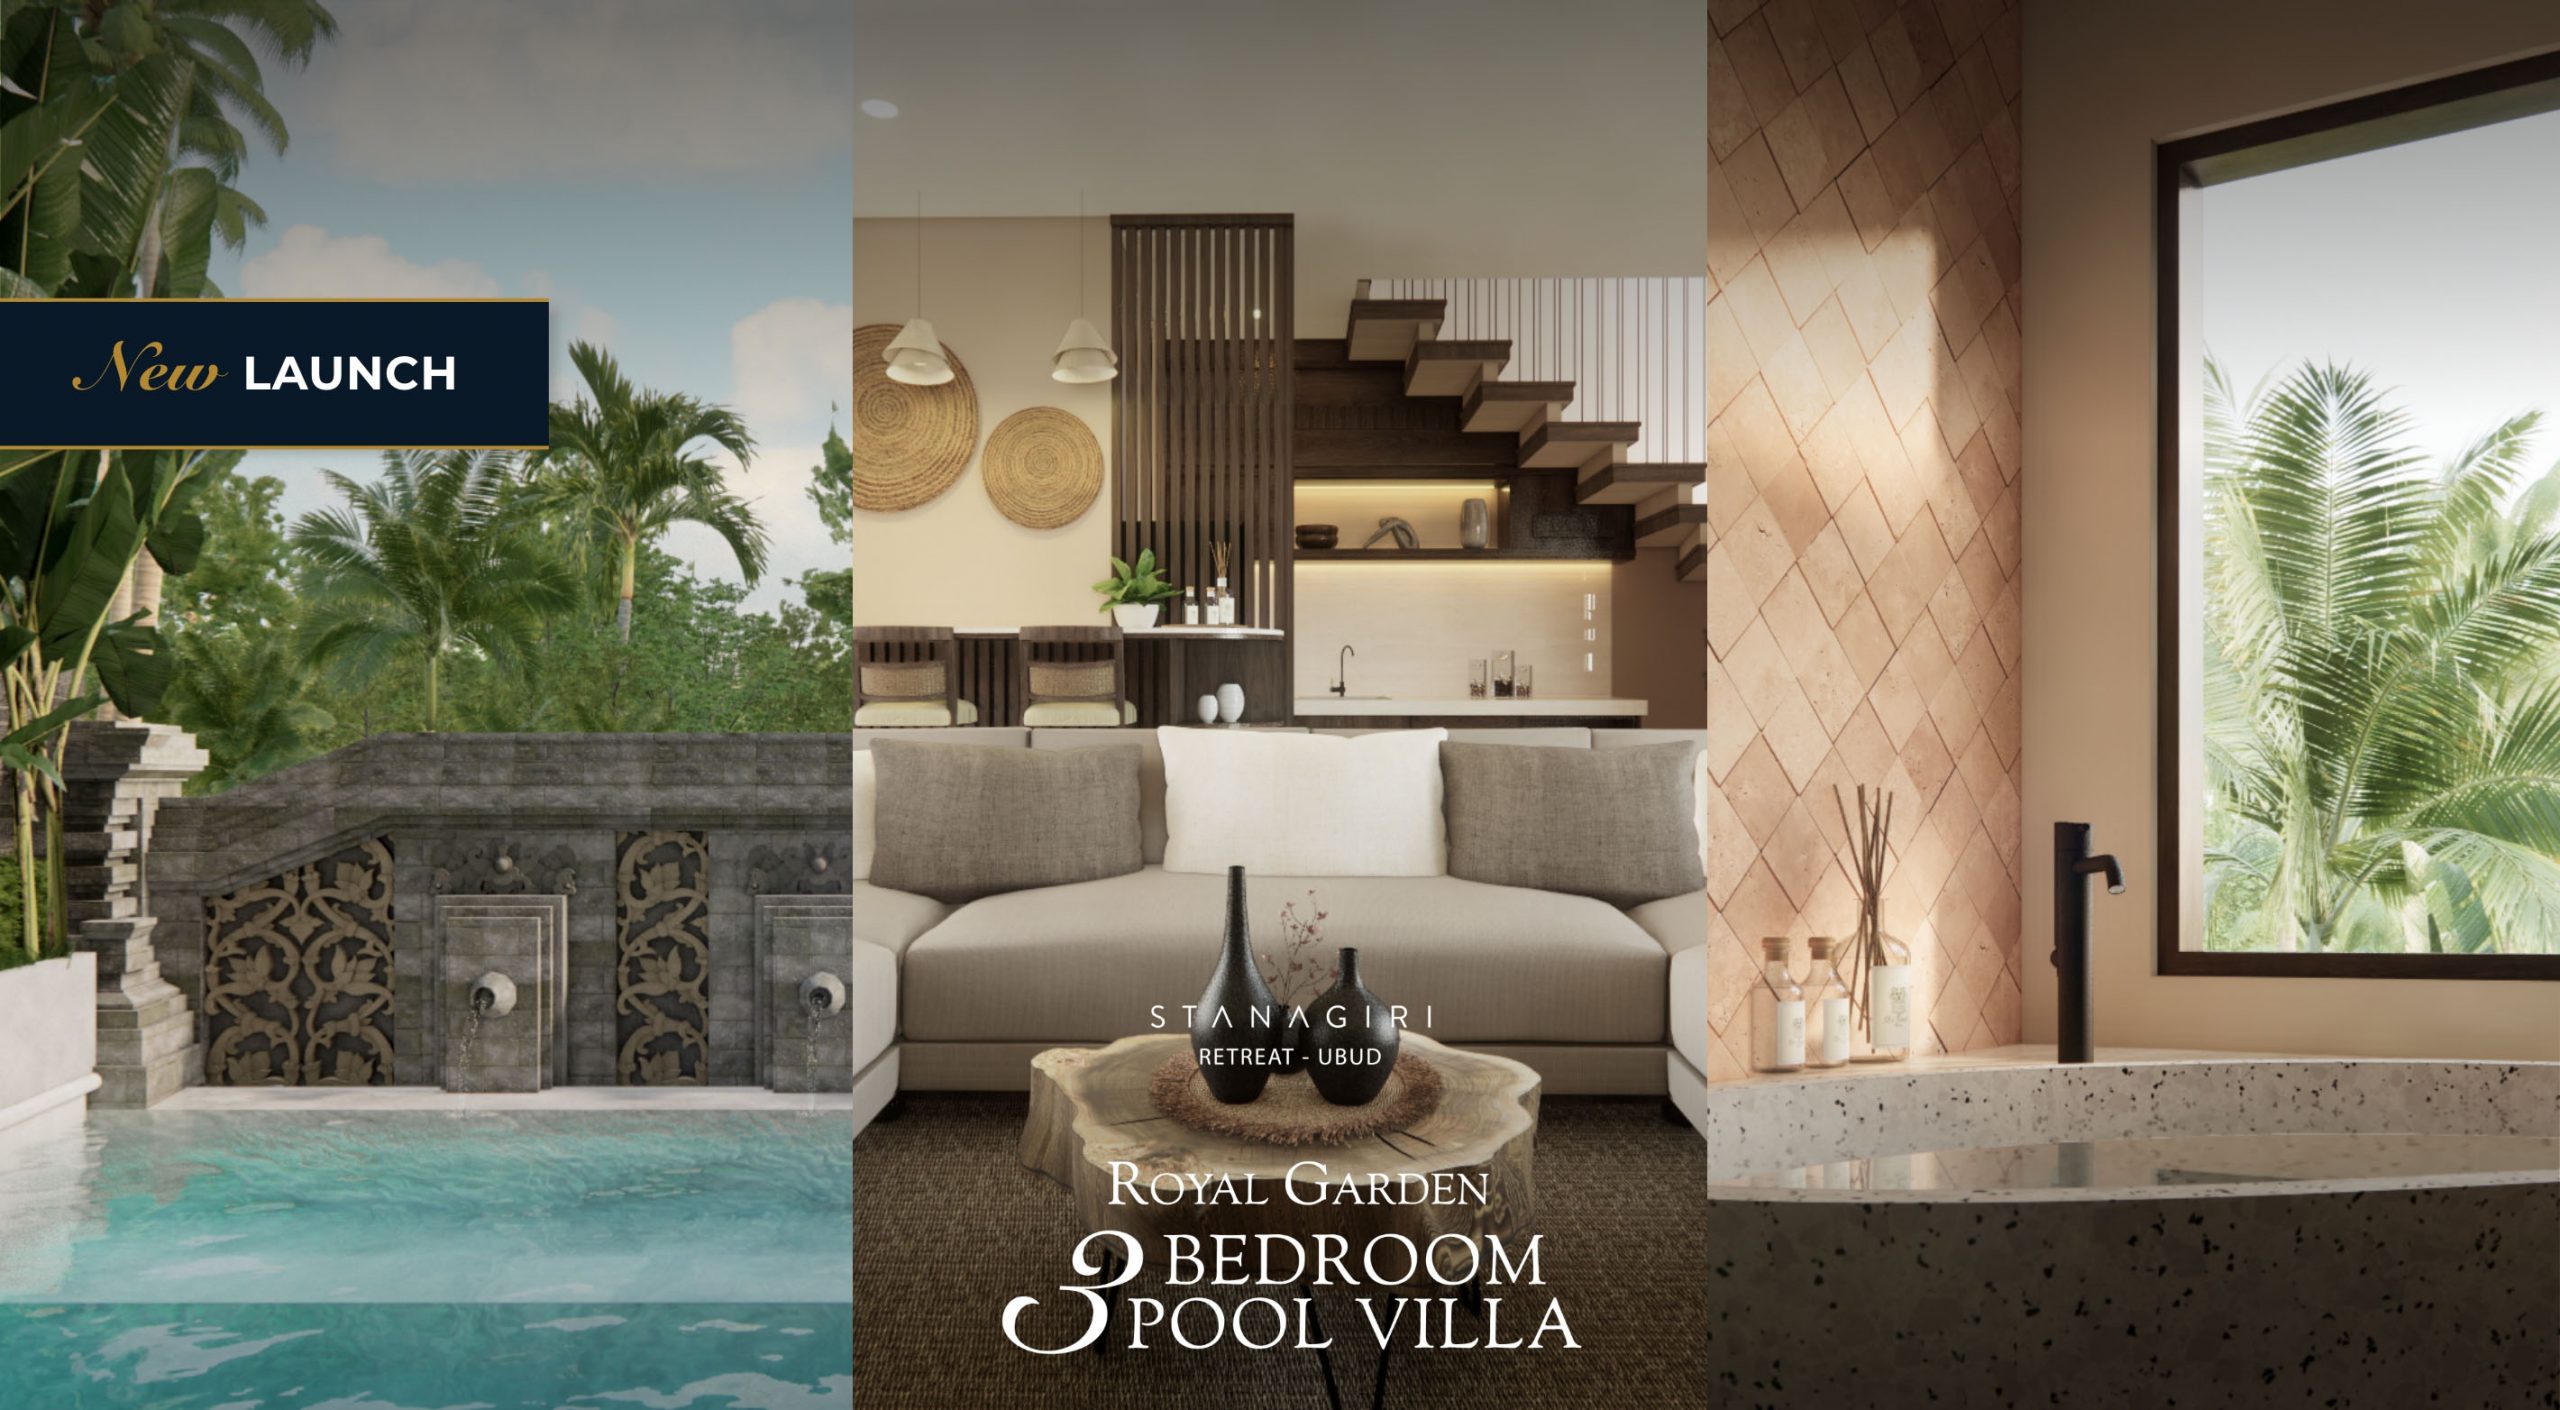 3 Bedroom Garden Pool Villa - Stanagiri Retreat Ubud Bali